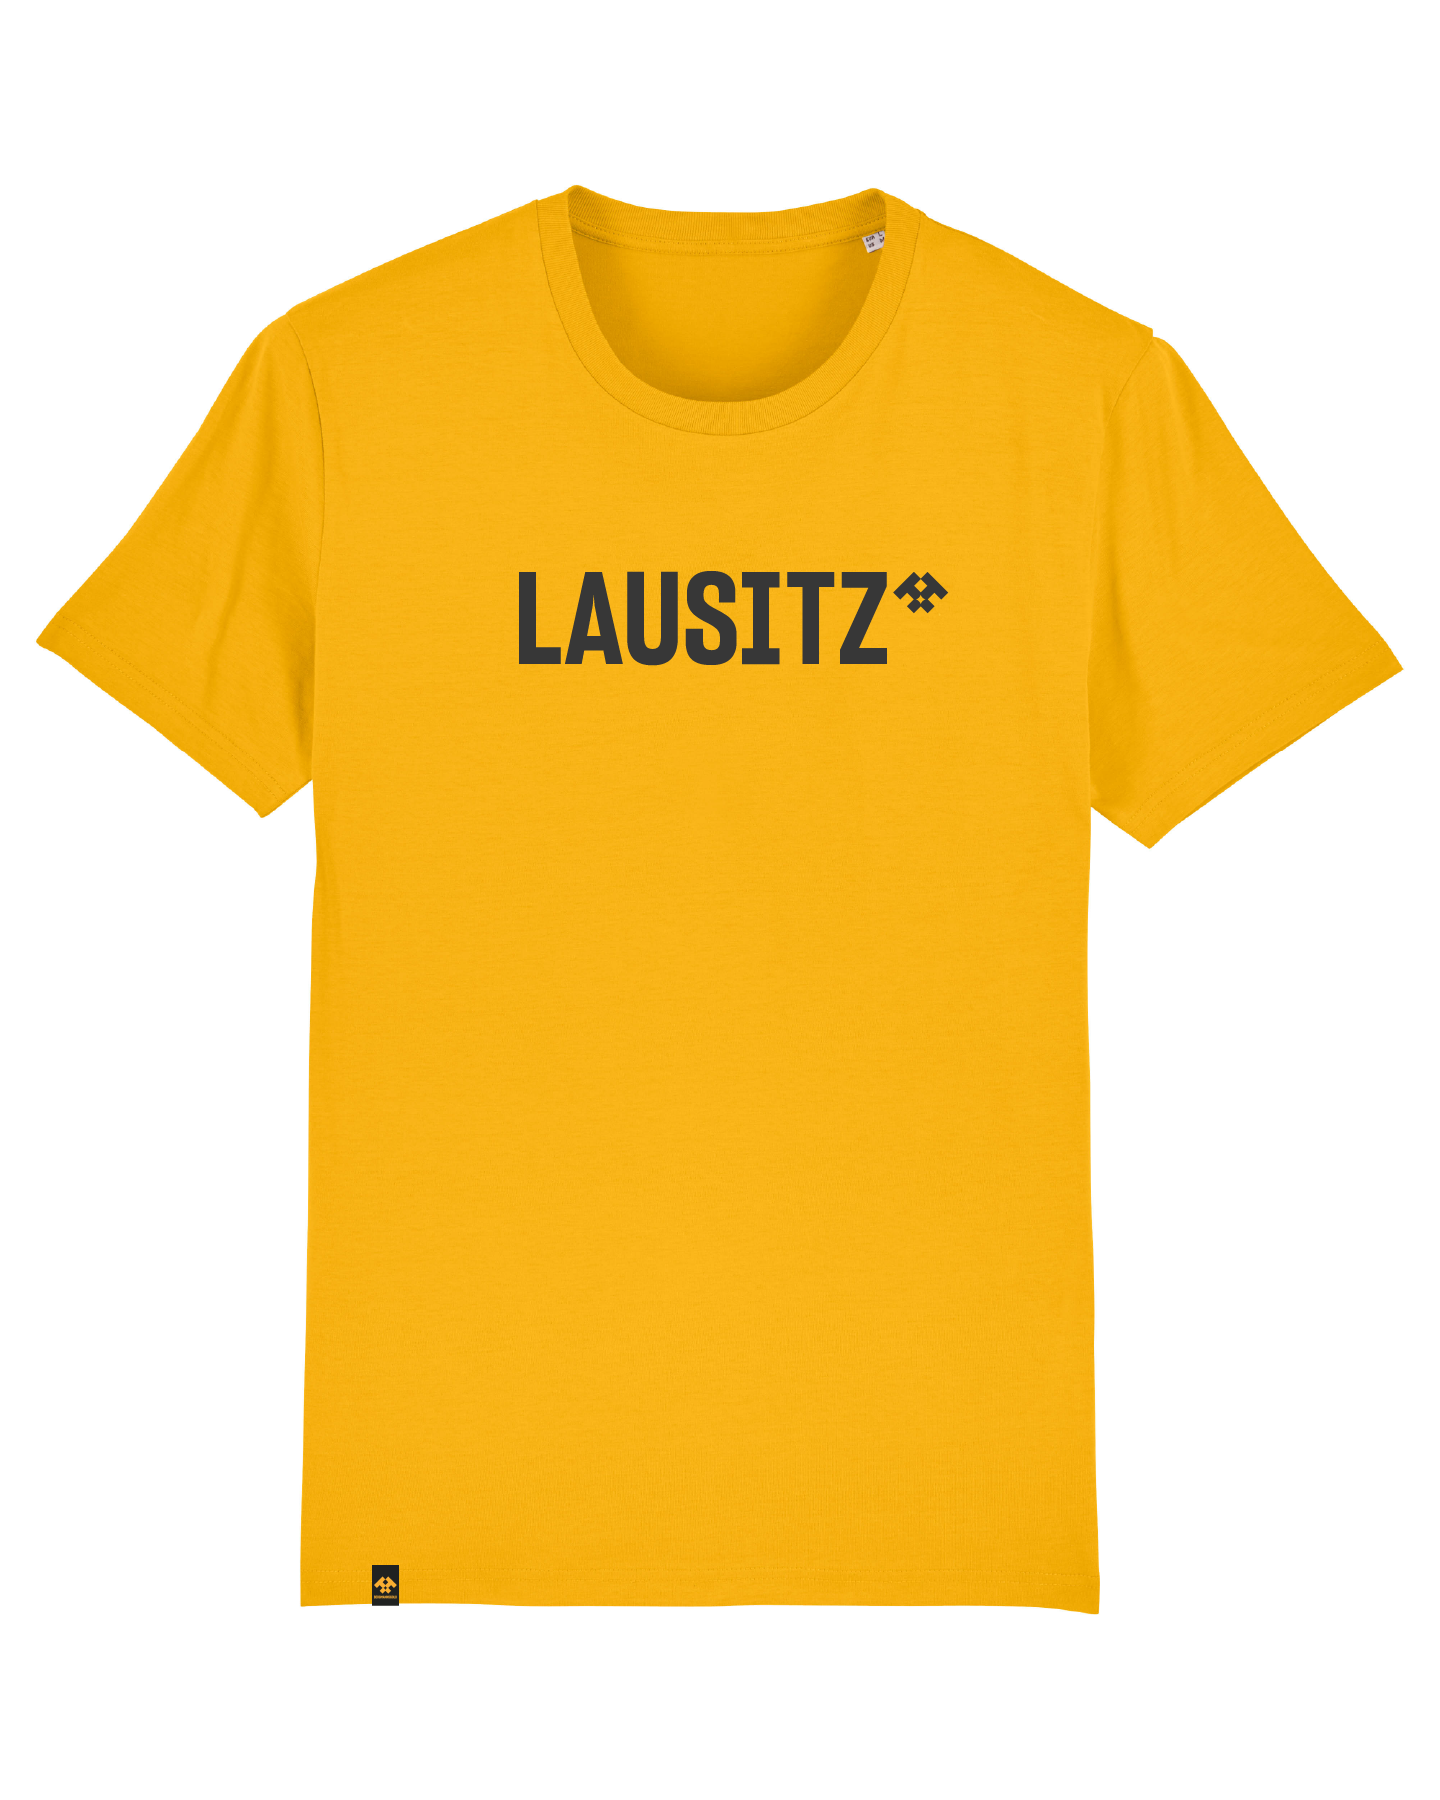 T-Shirt Herren LAUSITZ gelb